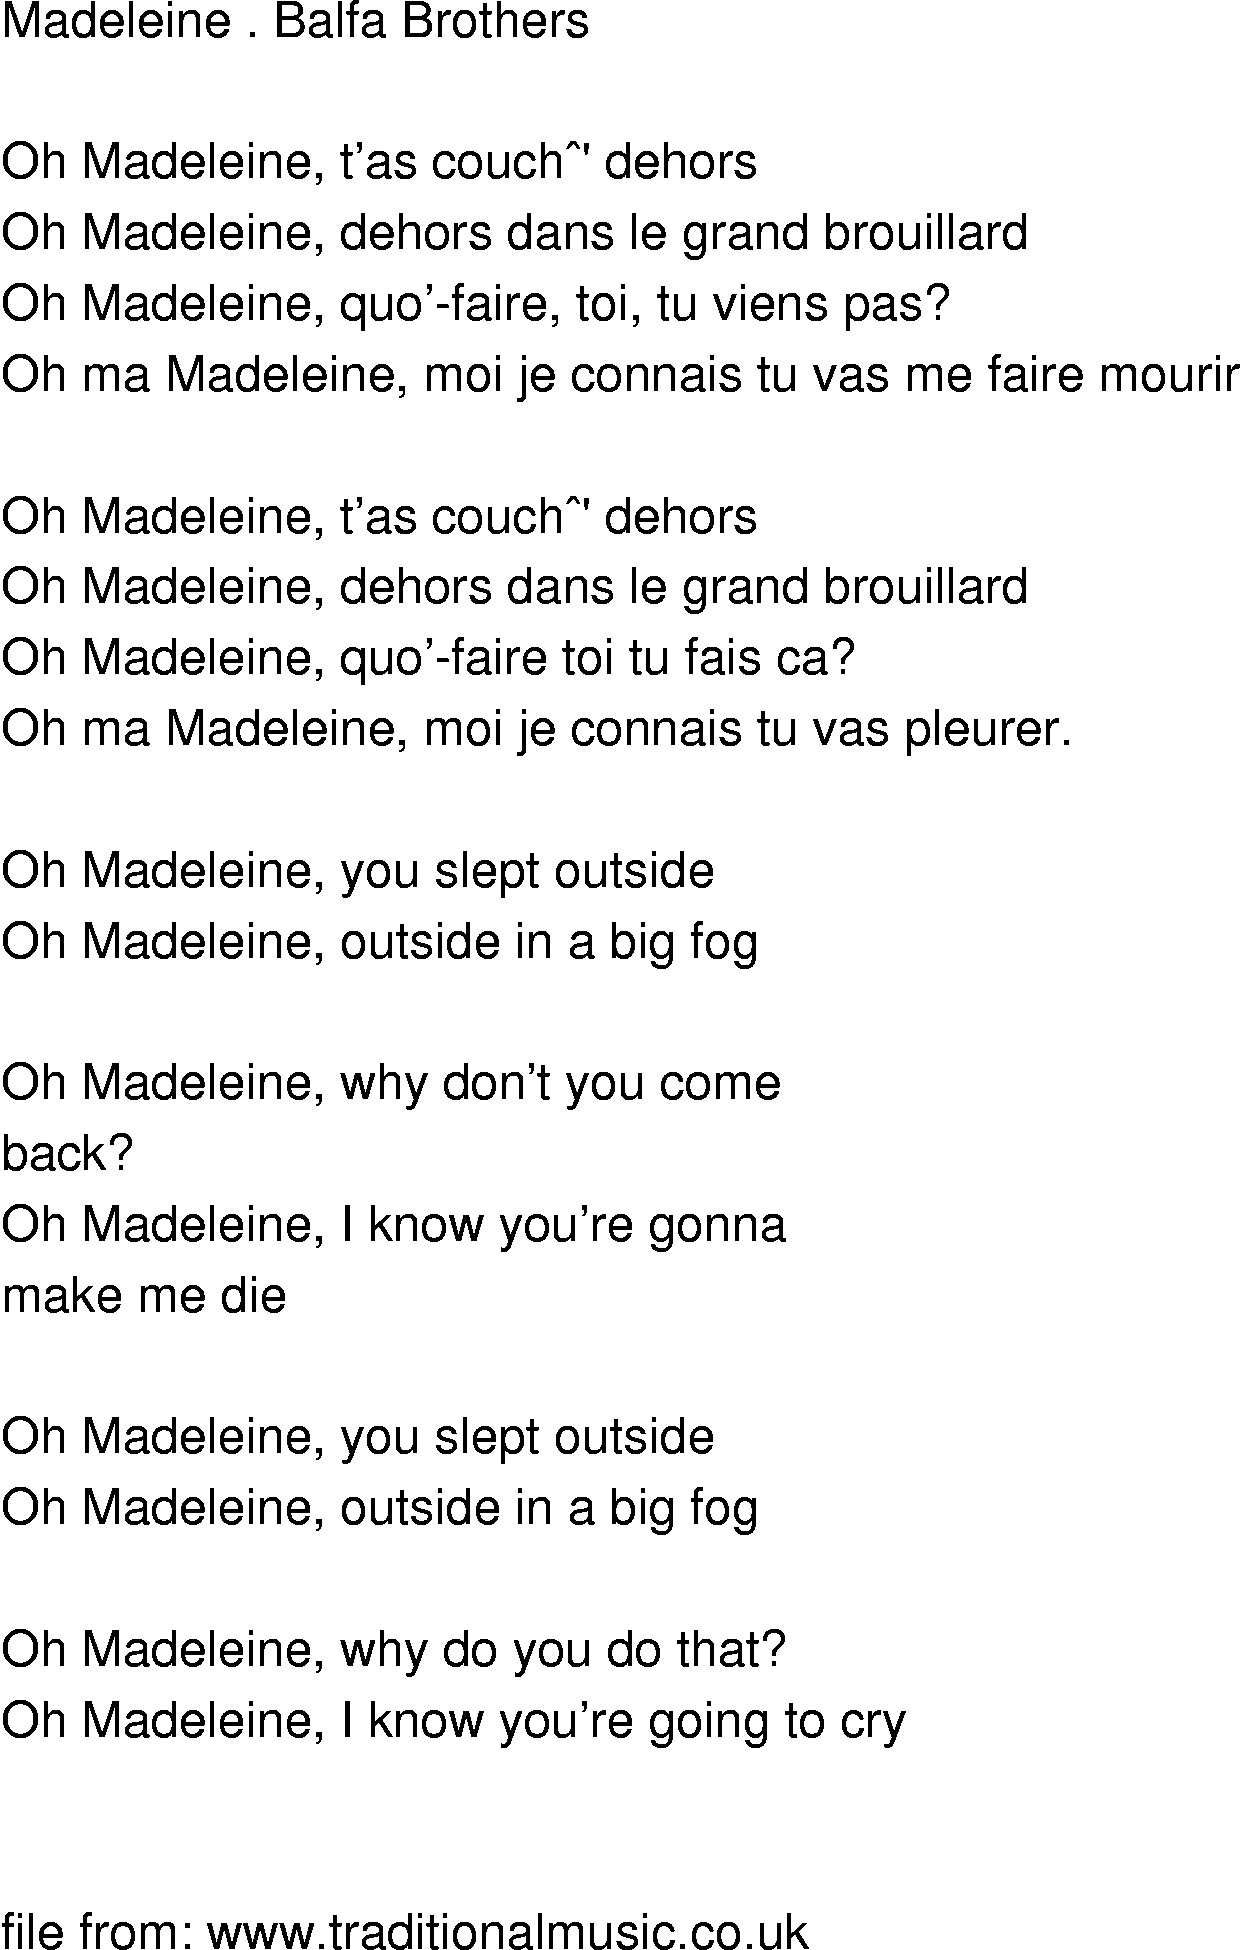 Old-Time (oldtimey) Song Lyrics - madeleine